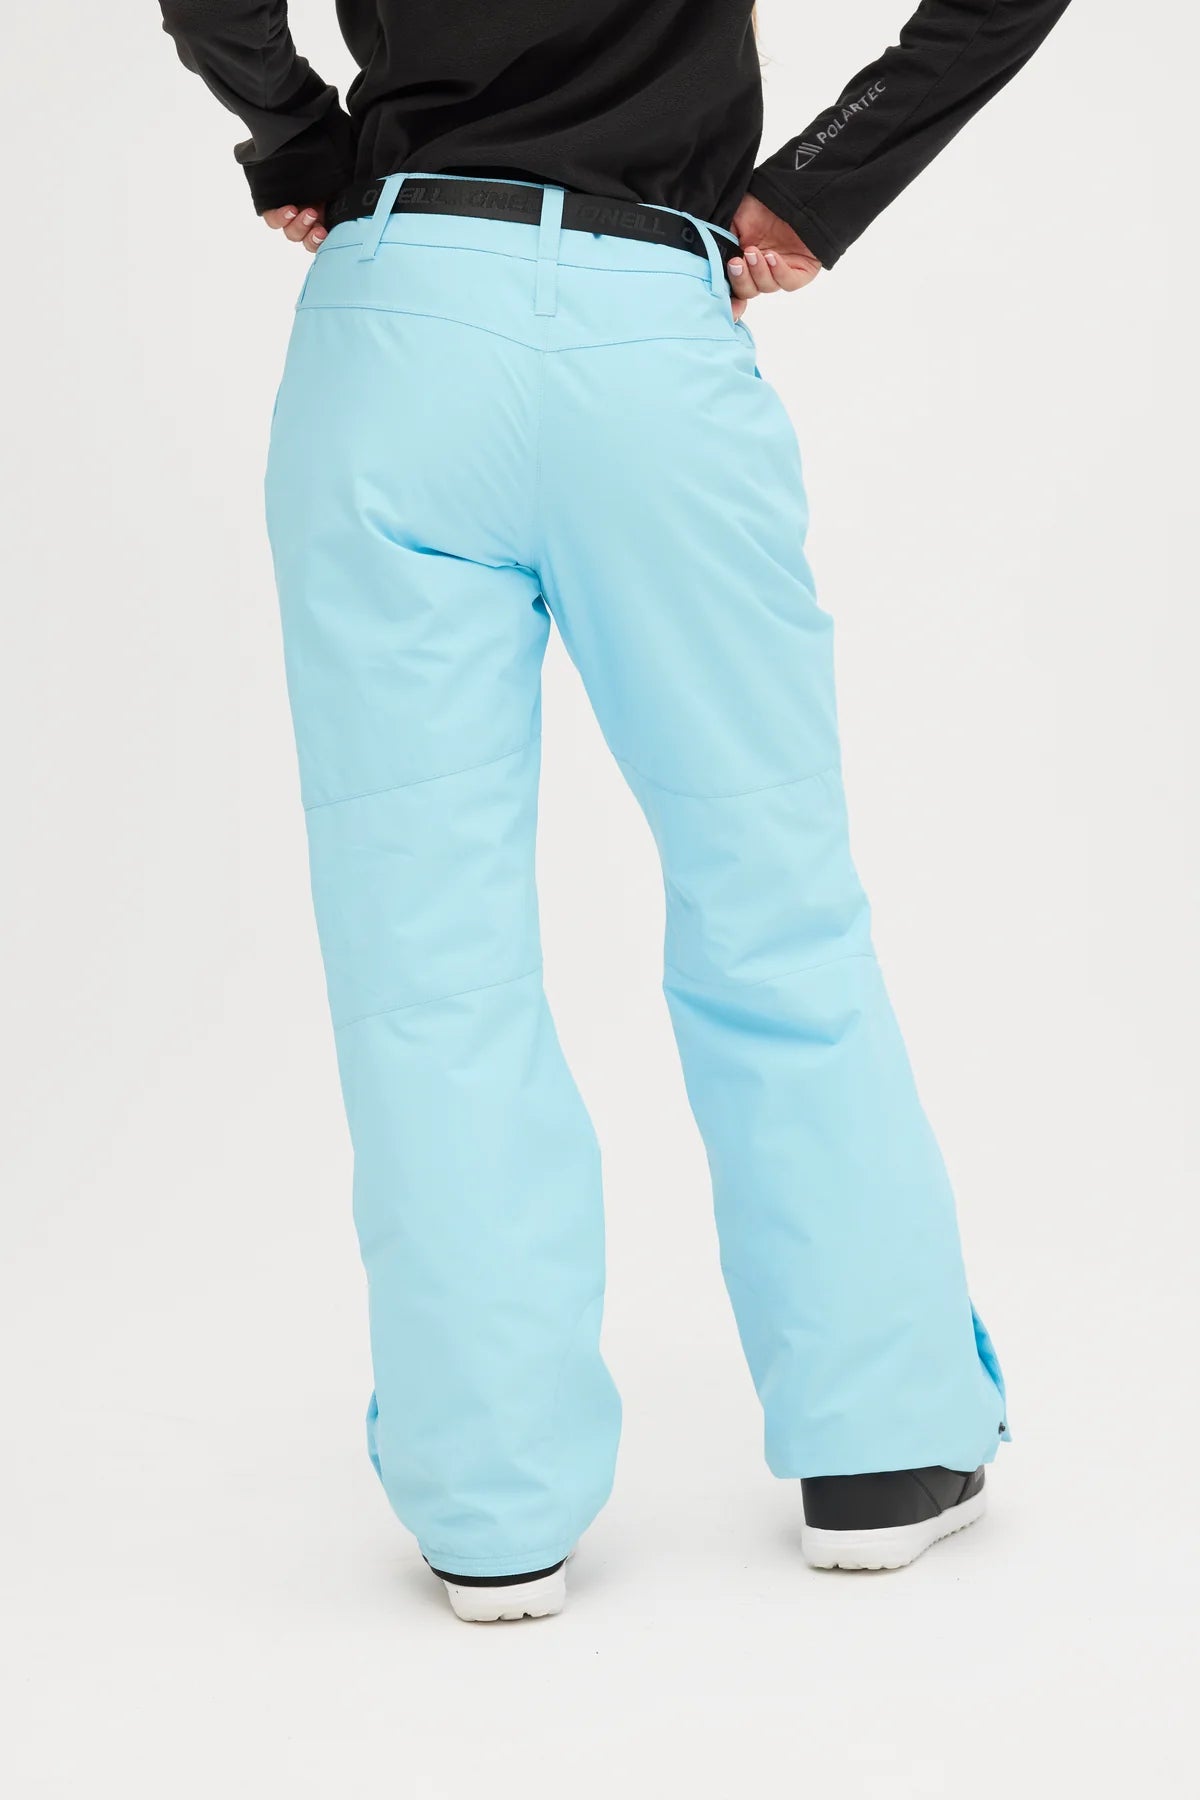 Roxy Snow Junior's Backyard Regular Fit Snow Pant, Powder Blue, X